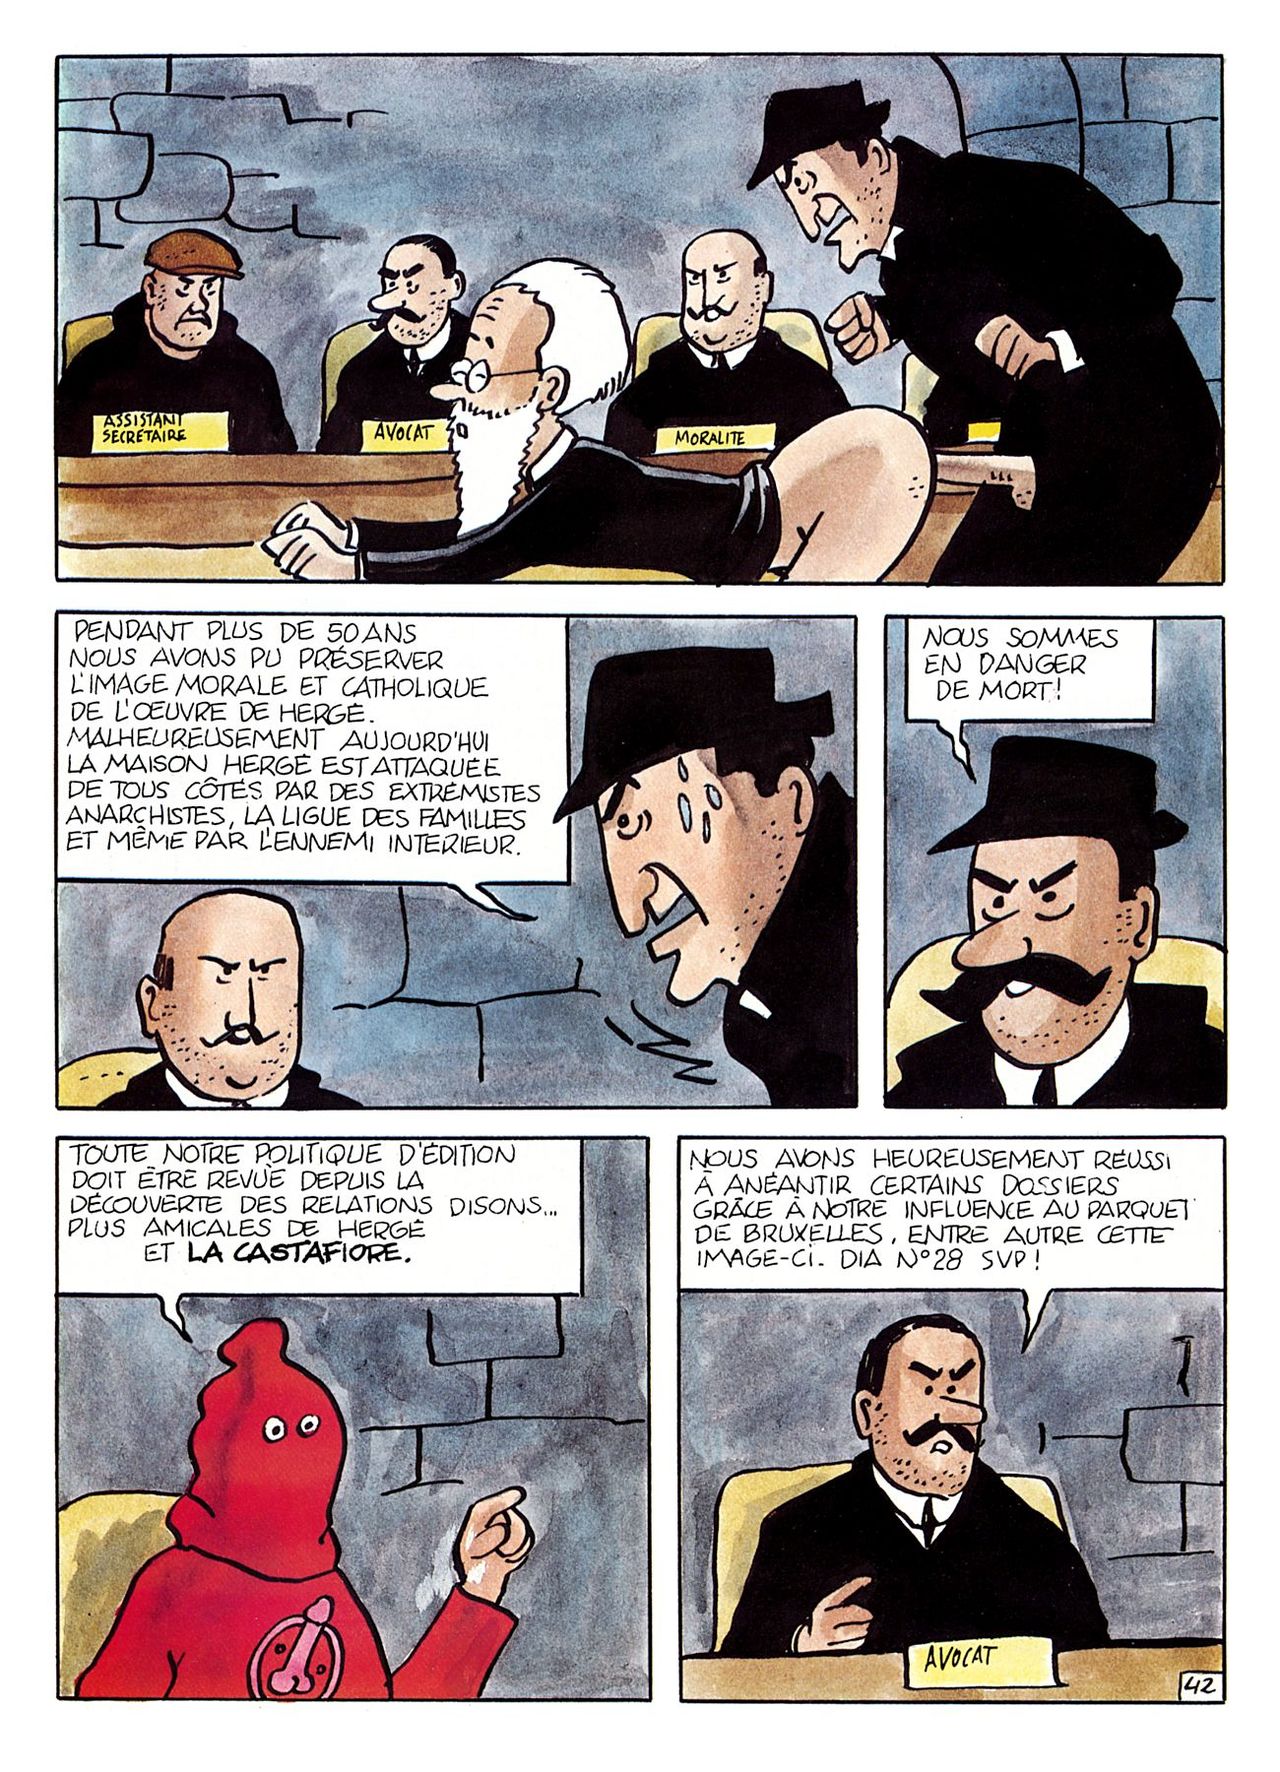 La Vie Sexuelle De Tintin numero d'image 45